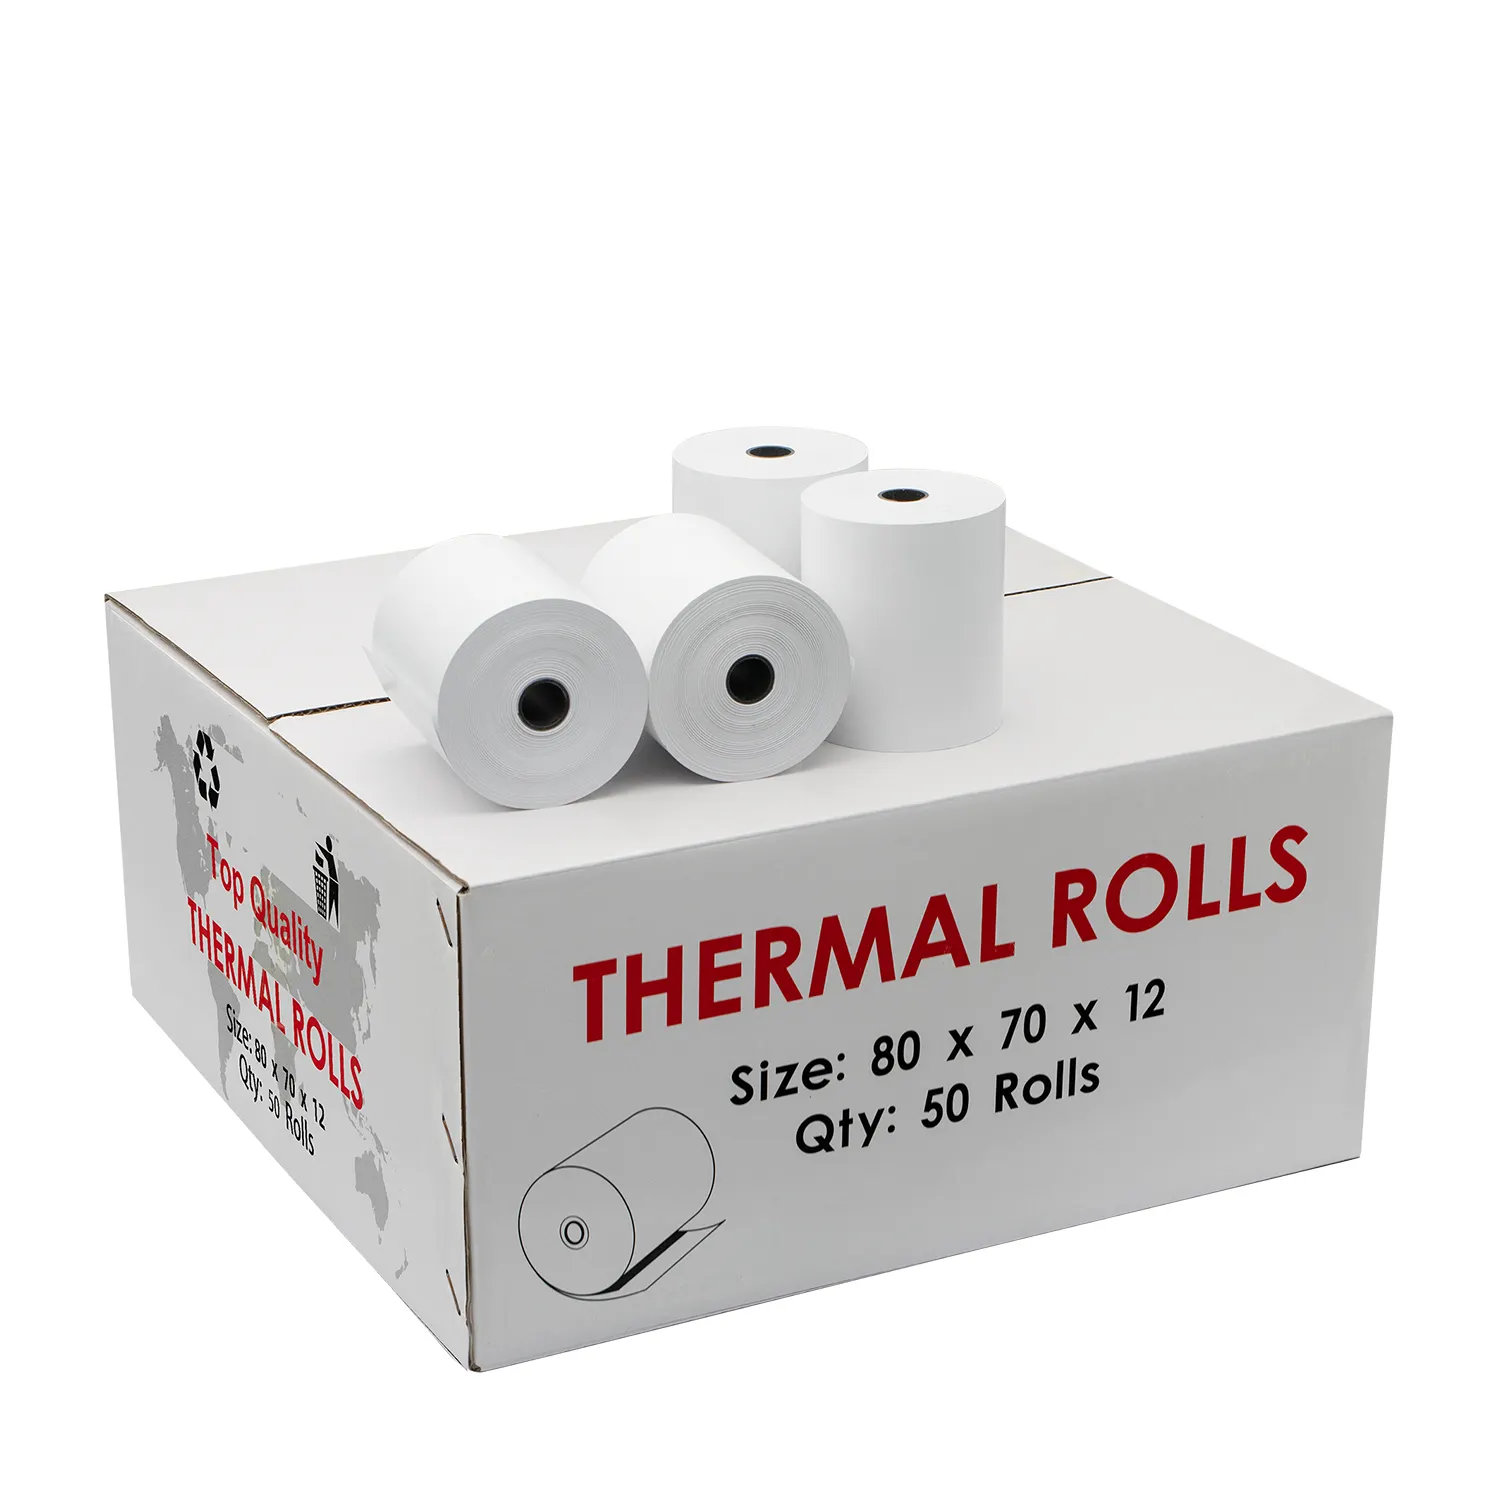 Kustom Thermal Paper Roll Receipt Kasir Pos Thermal Paper Rolls Receipt Paper untuk Pos Atm untuk Penggunaan Bisnis